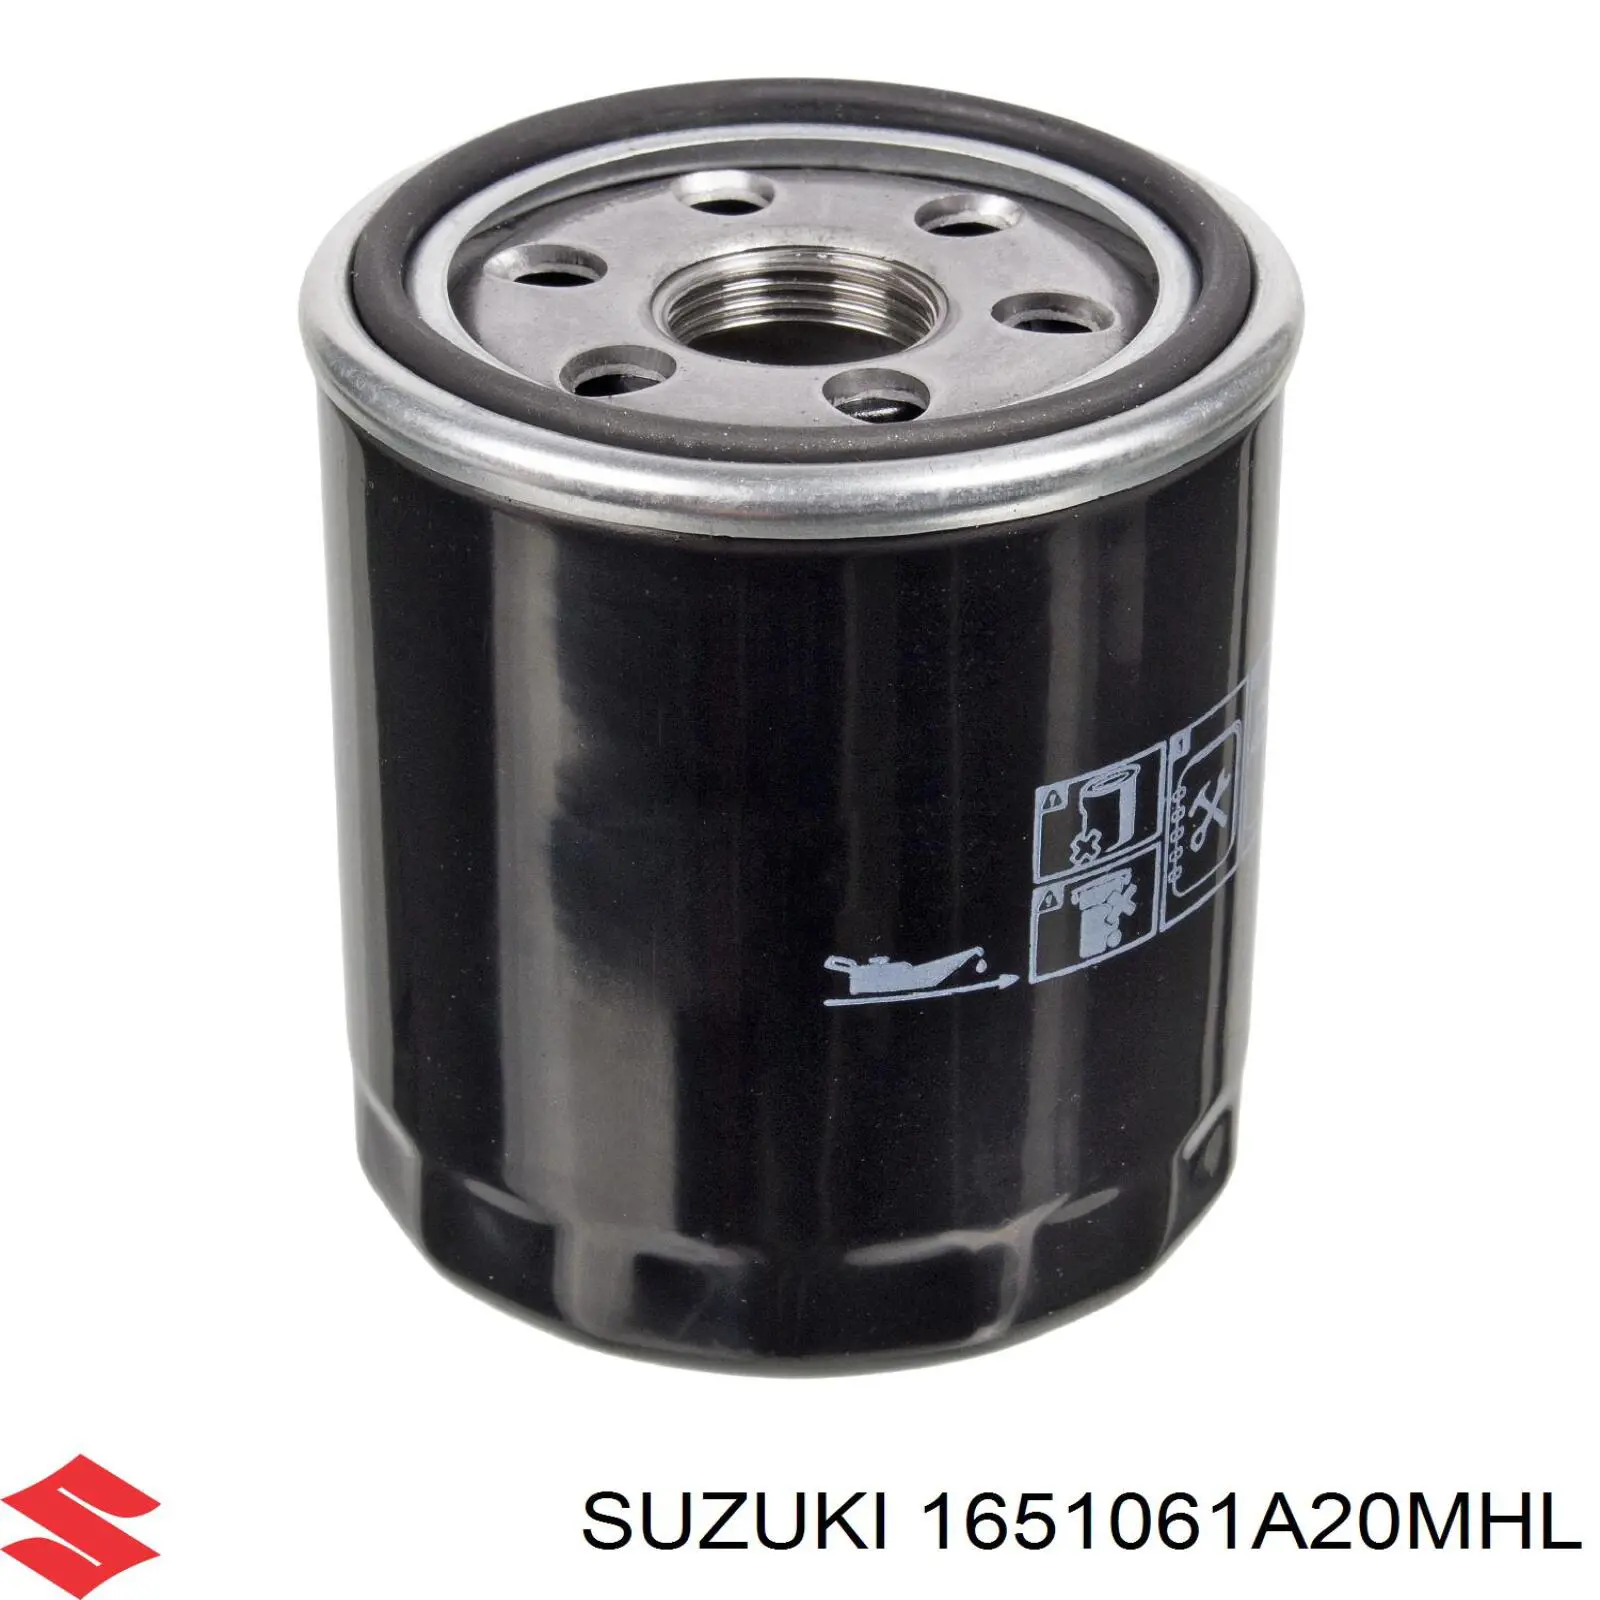 1651061A20MHL Suzuki filtro de aceite